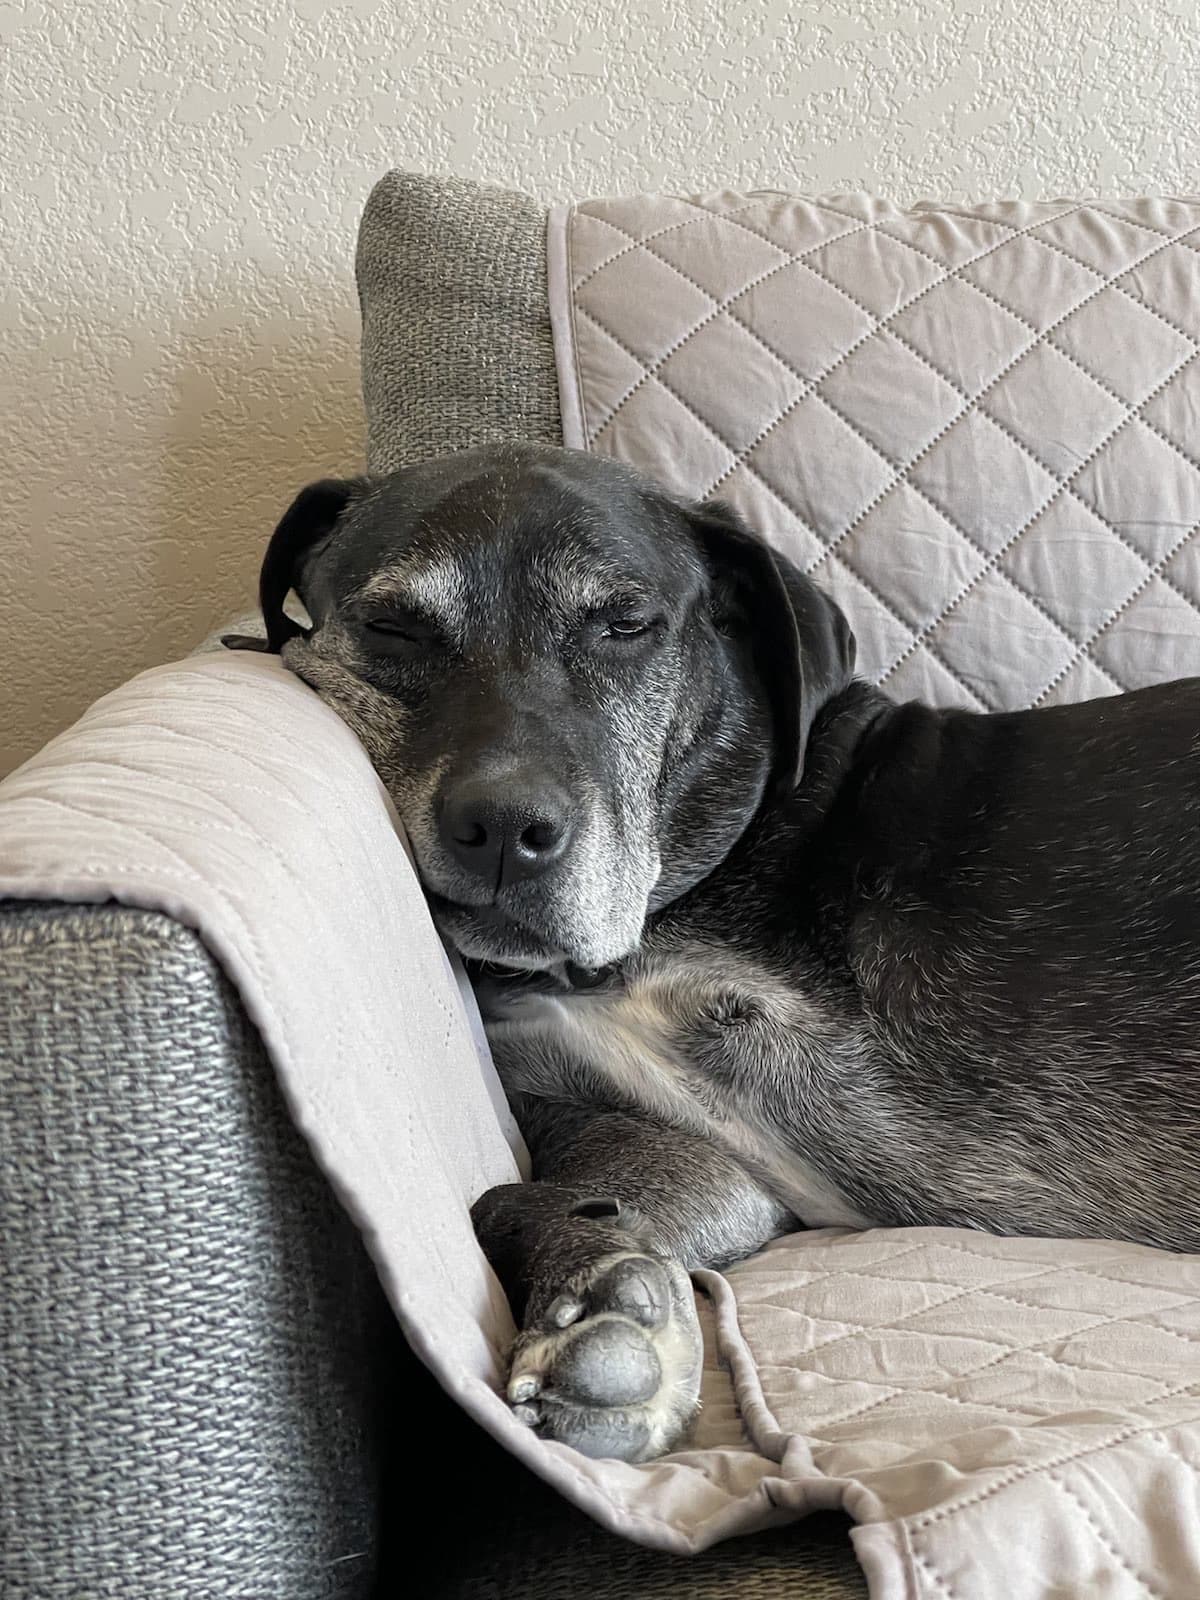 A senior grey muzzled dog sleeping 